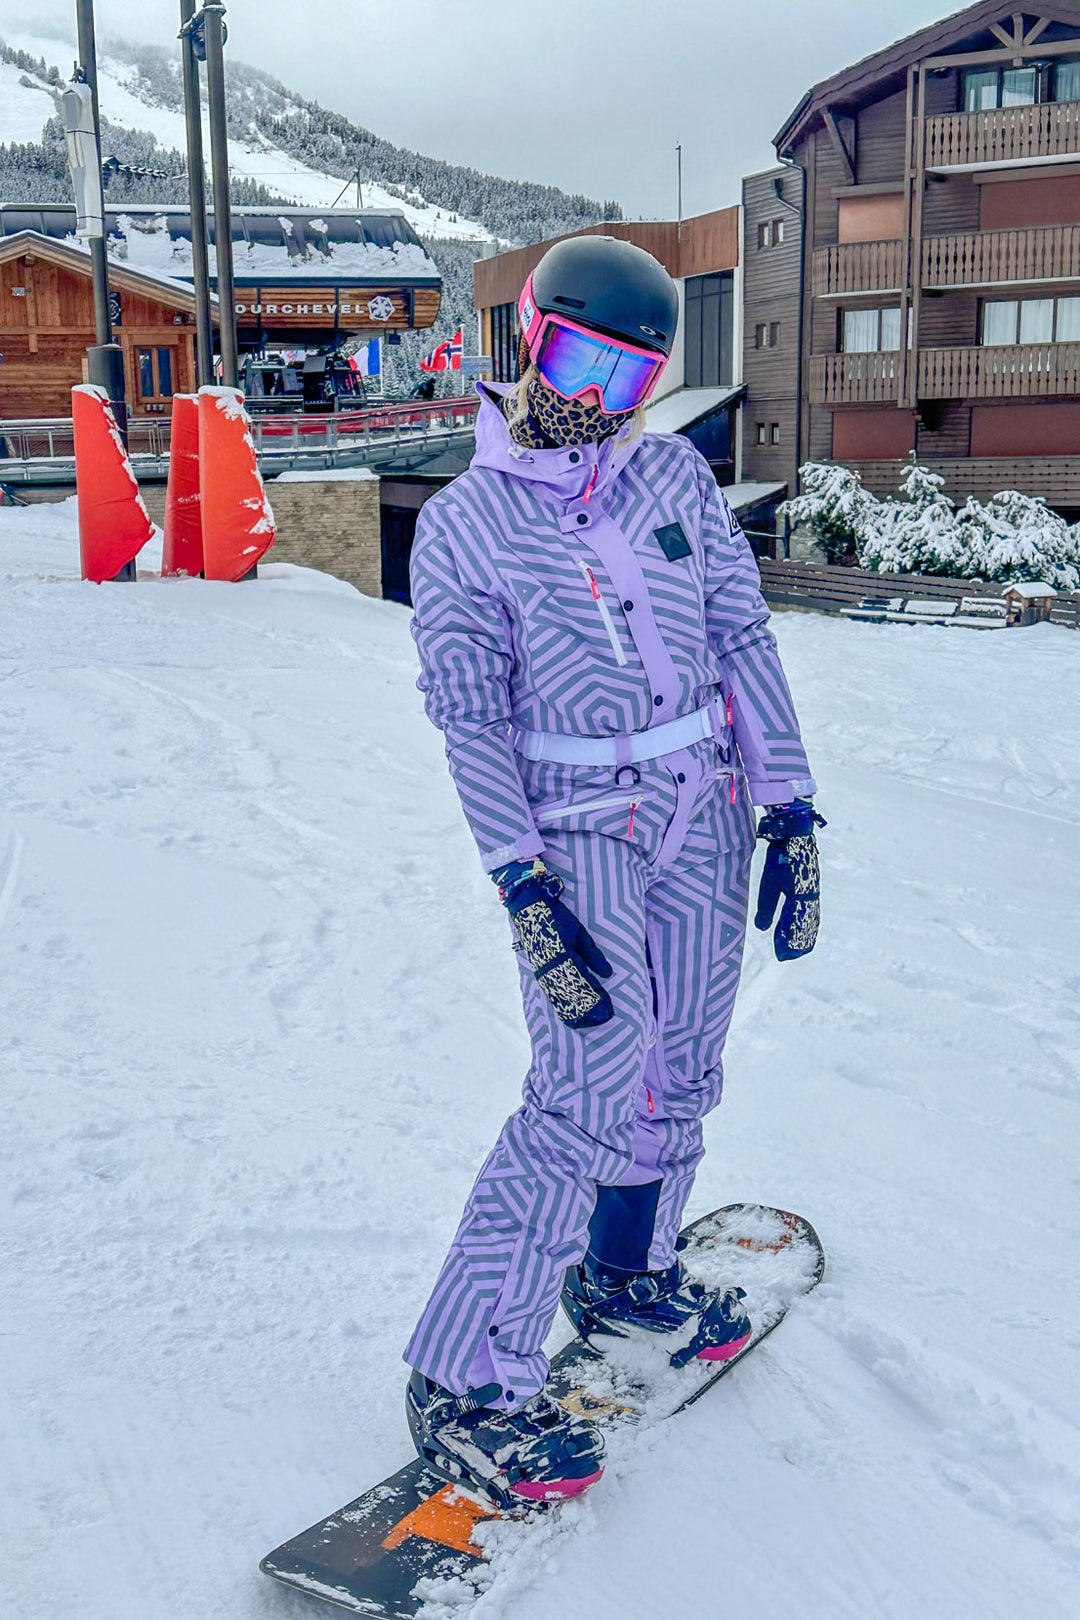 Fall Line Purple & Grey Curved Female Ski Suit